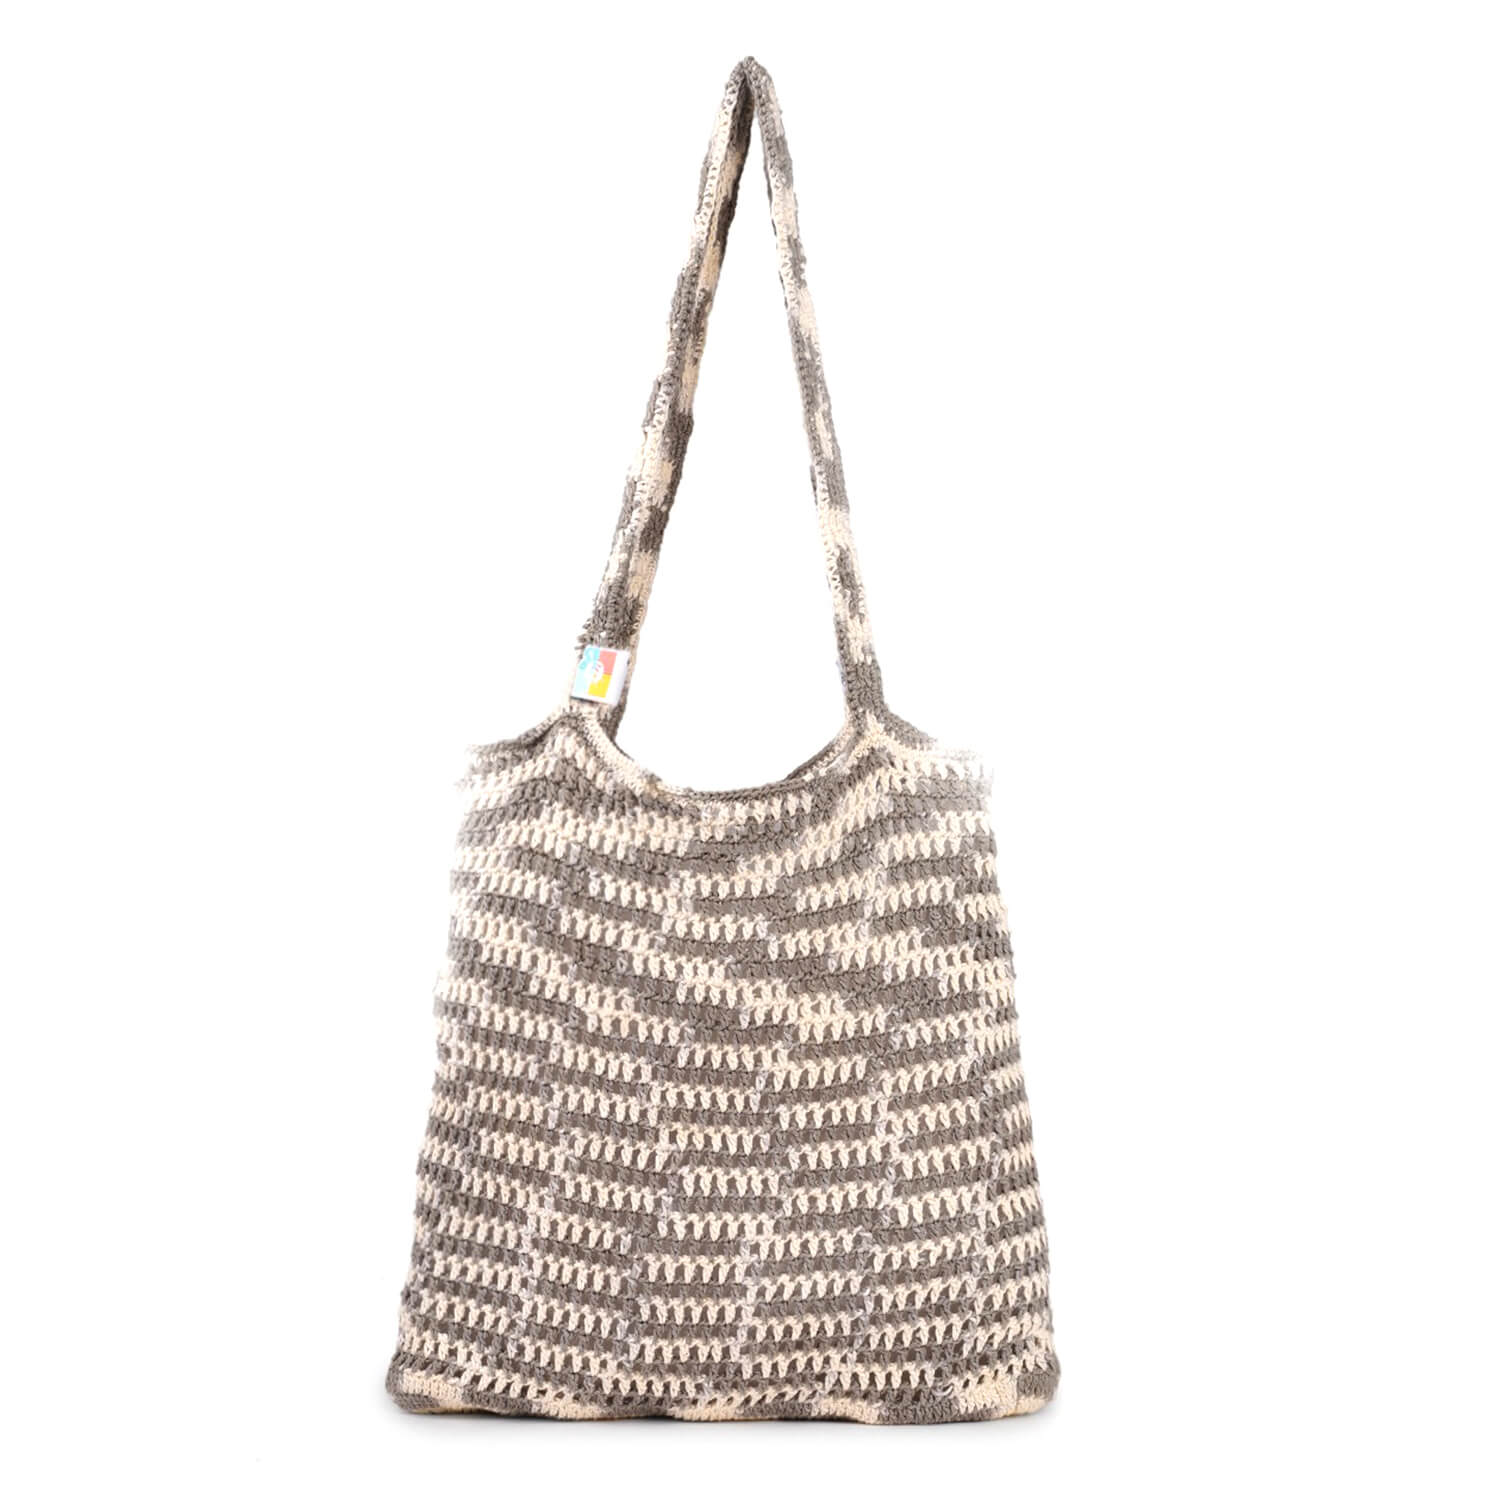 Handmade Crochet Market Bag - Cream, Grey 2800